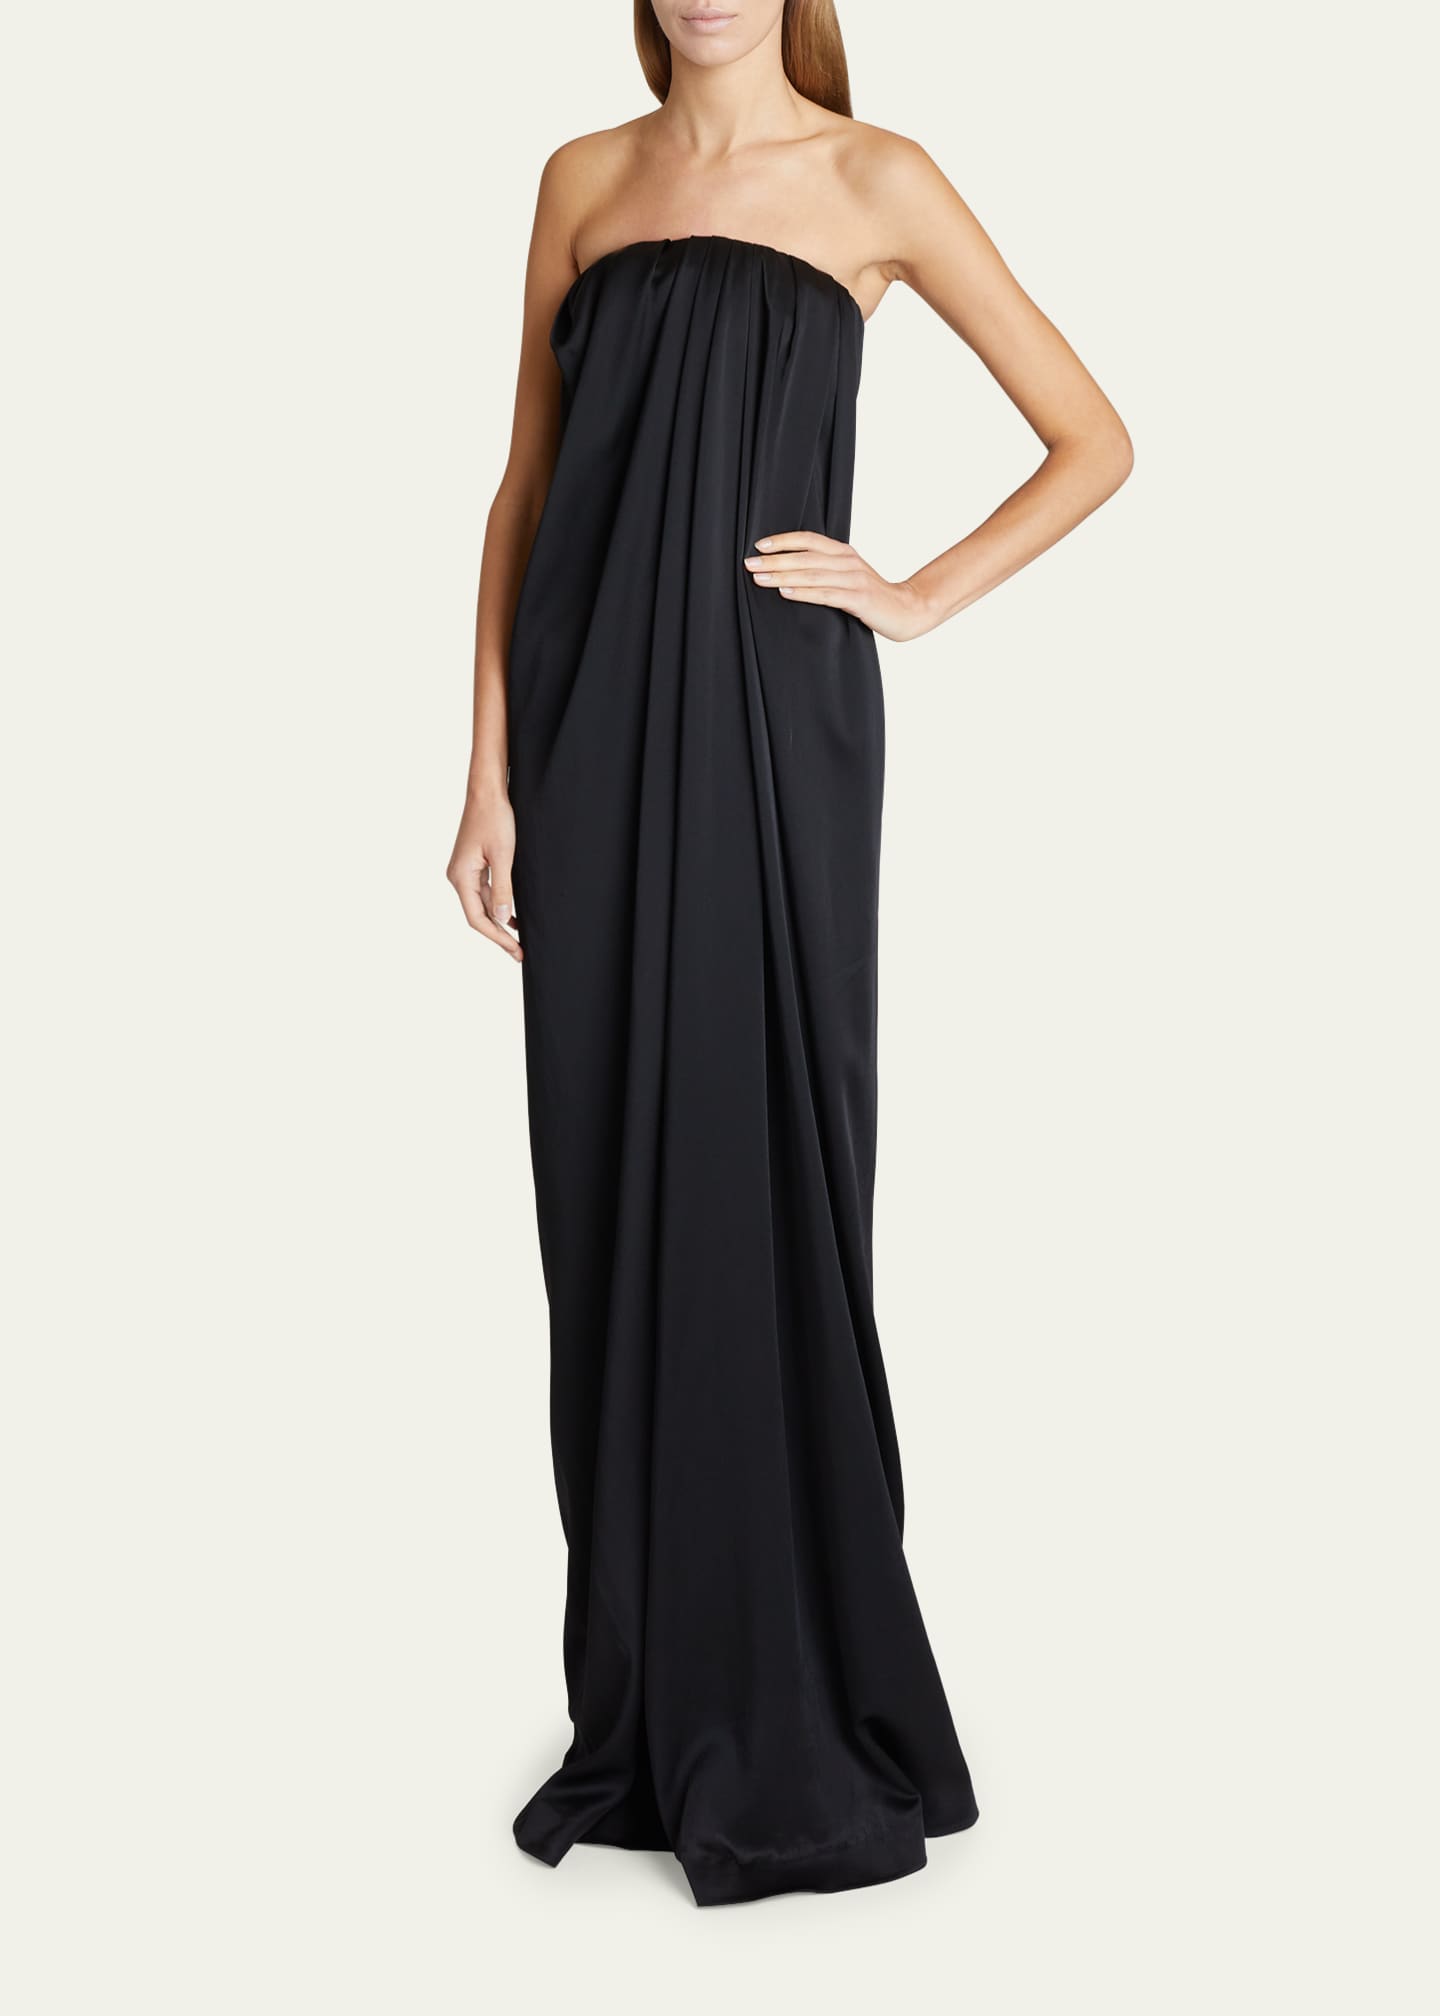 Saint Laurent Goddess Draped Satin Strapless Gown - Bergdorf Goodman